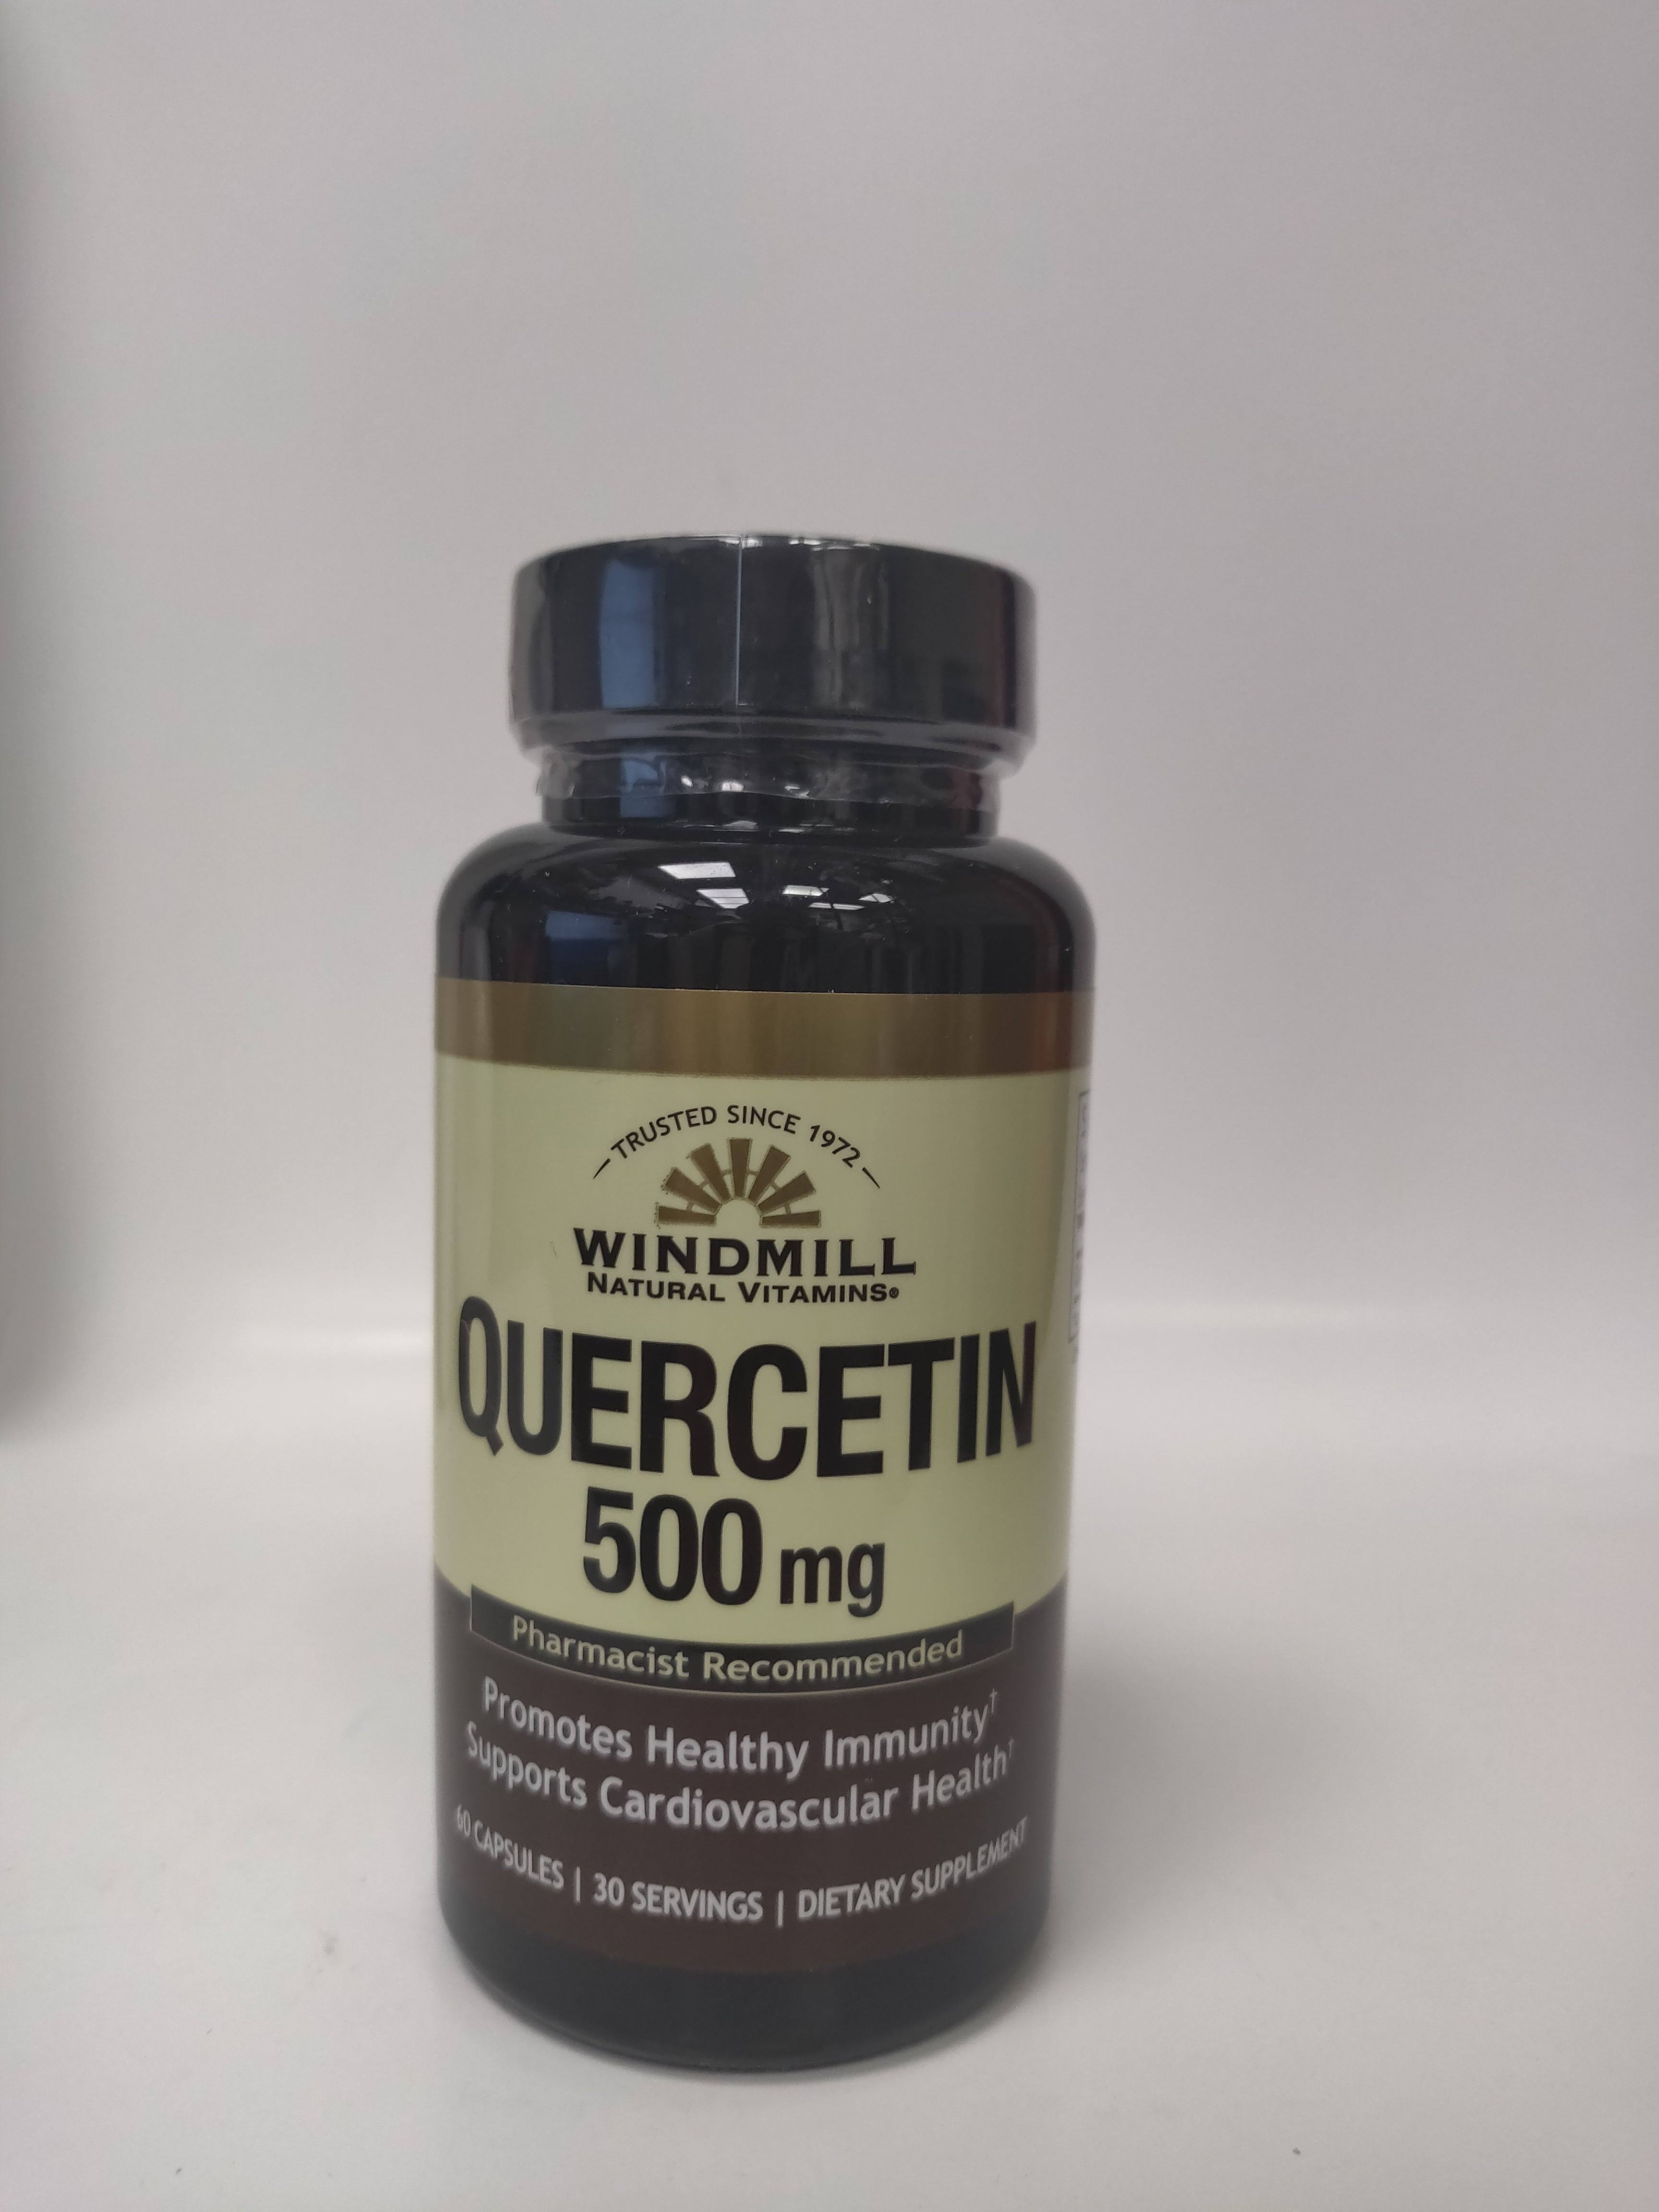 Windmill Natural Vitamins Quercetin 500 mg - 60 Capsules Dietary Supplement Antioxidant